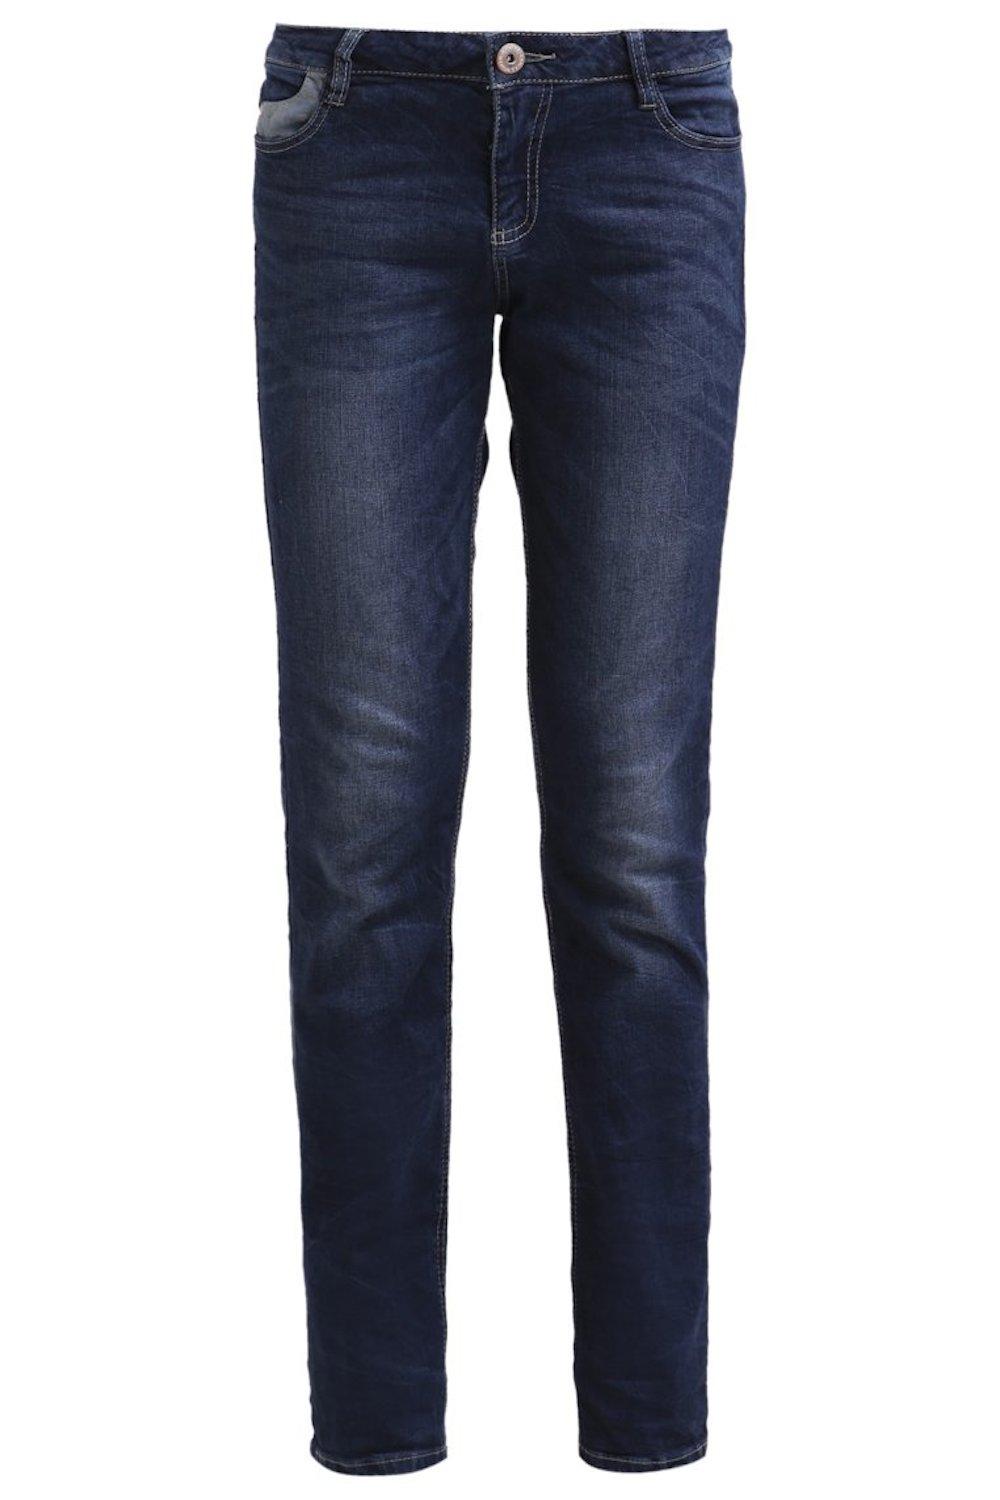 Rechte jeans - S.Oliver - 59,95 €